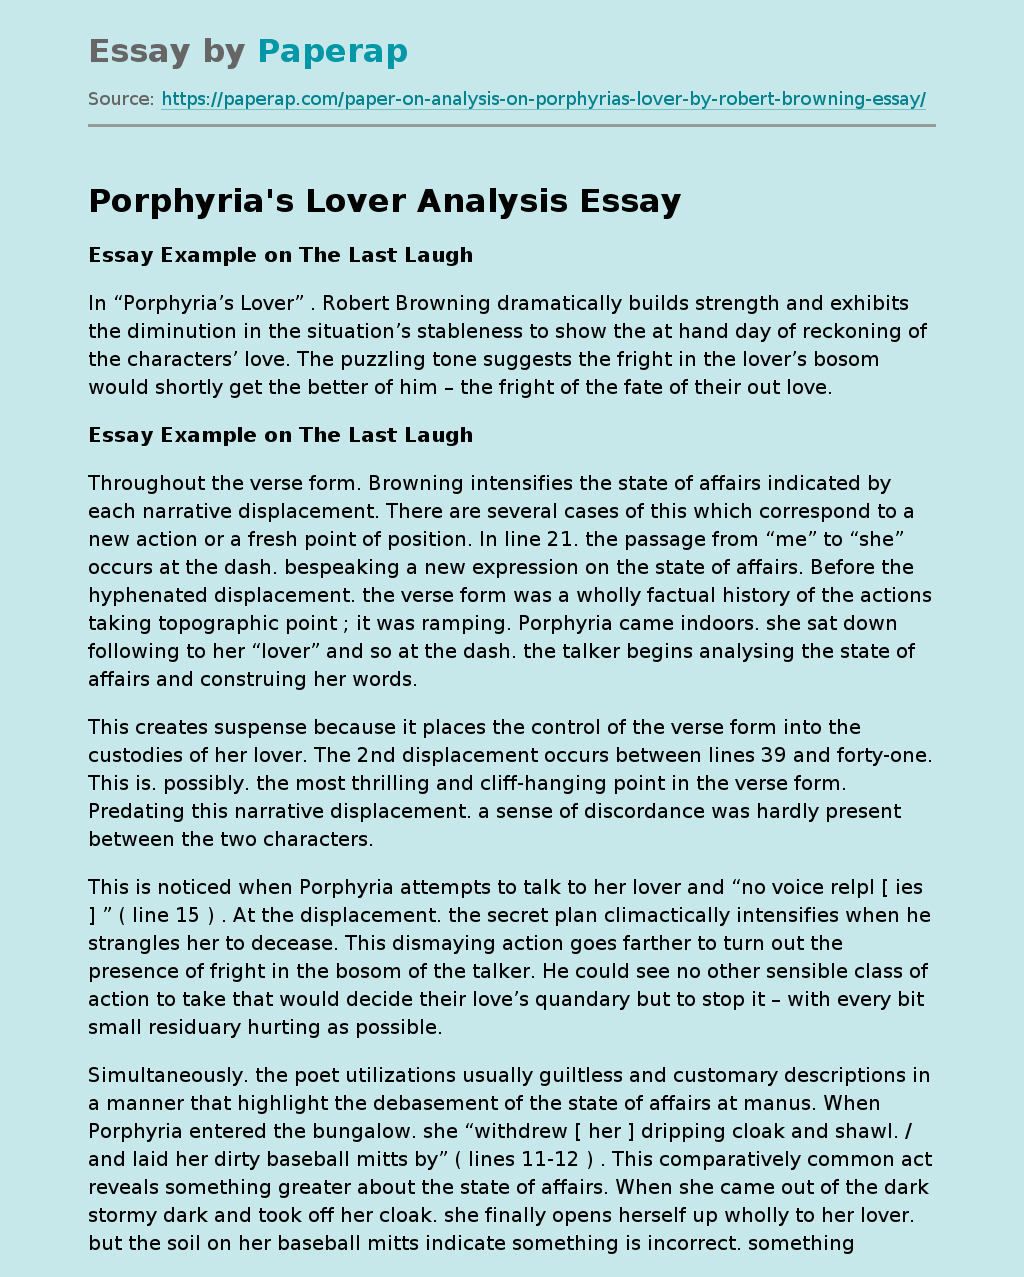 Porphyria's Lover Analysis